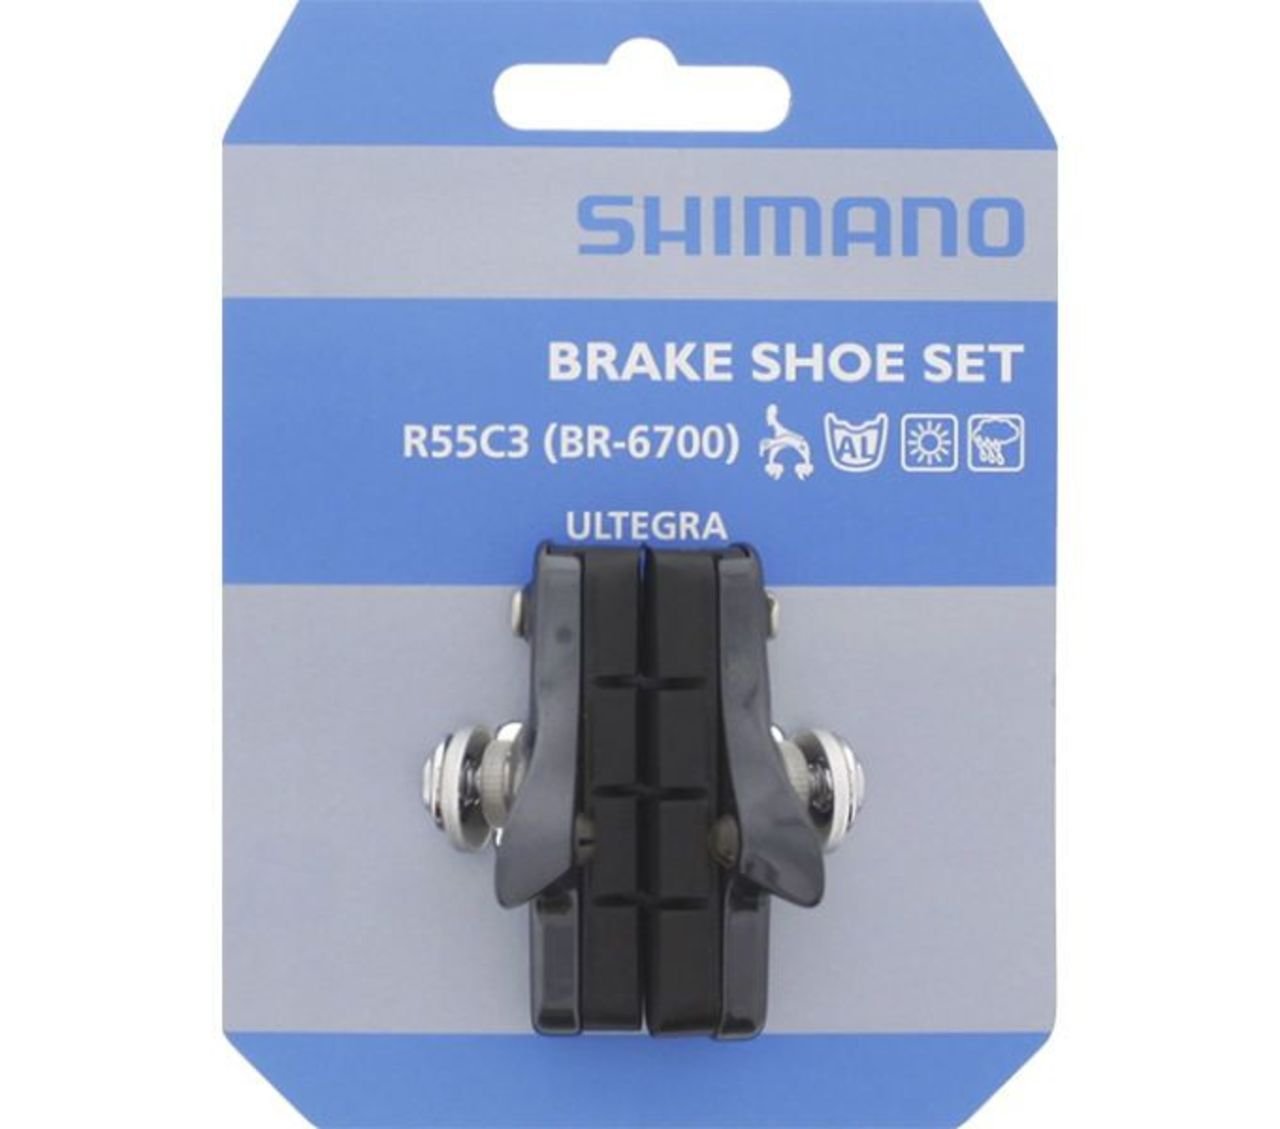 Тормозные колодки Shimano, brake pad, R55C3, Cartridge, for BR-6700, for aluminium rim, 1 pair, A154773 тормозные колодки shimano для дискового тормоза a01s 25 пар пластмасса y8ep98011